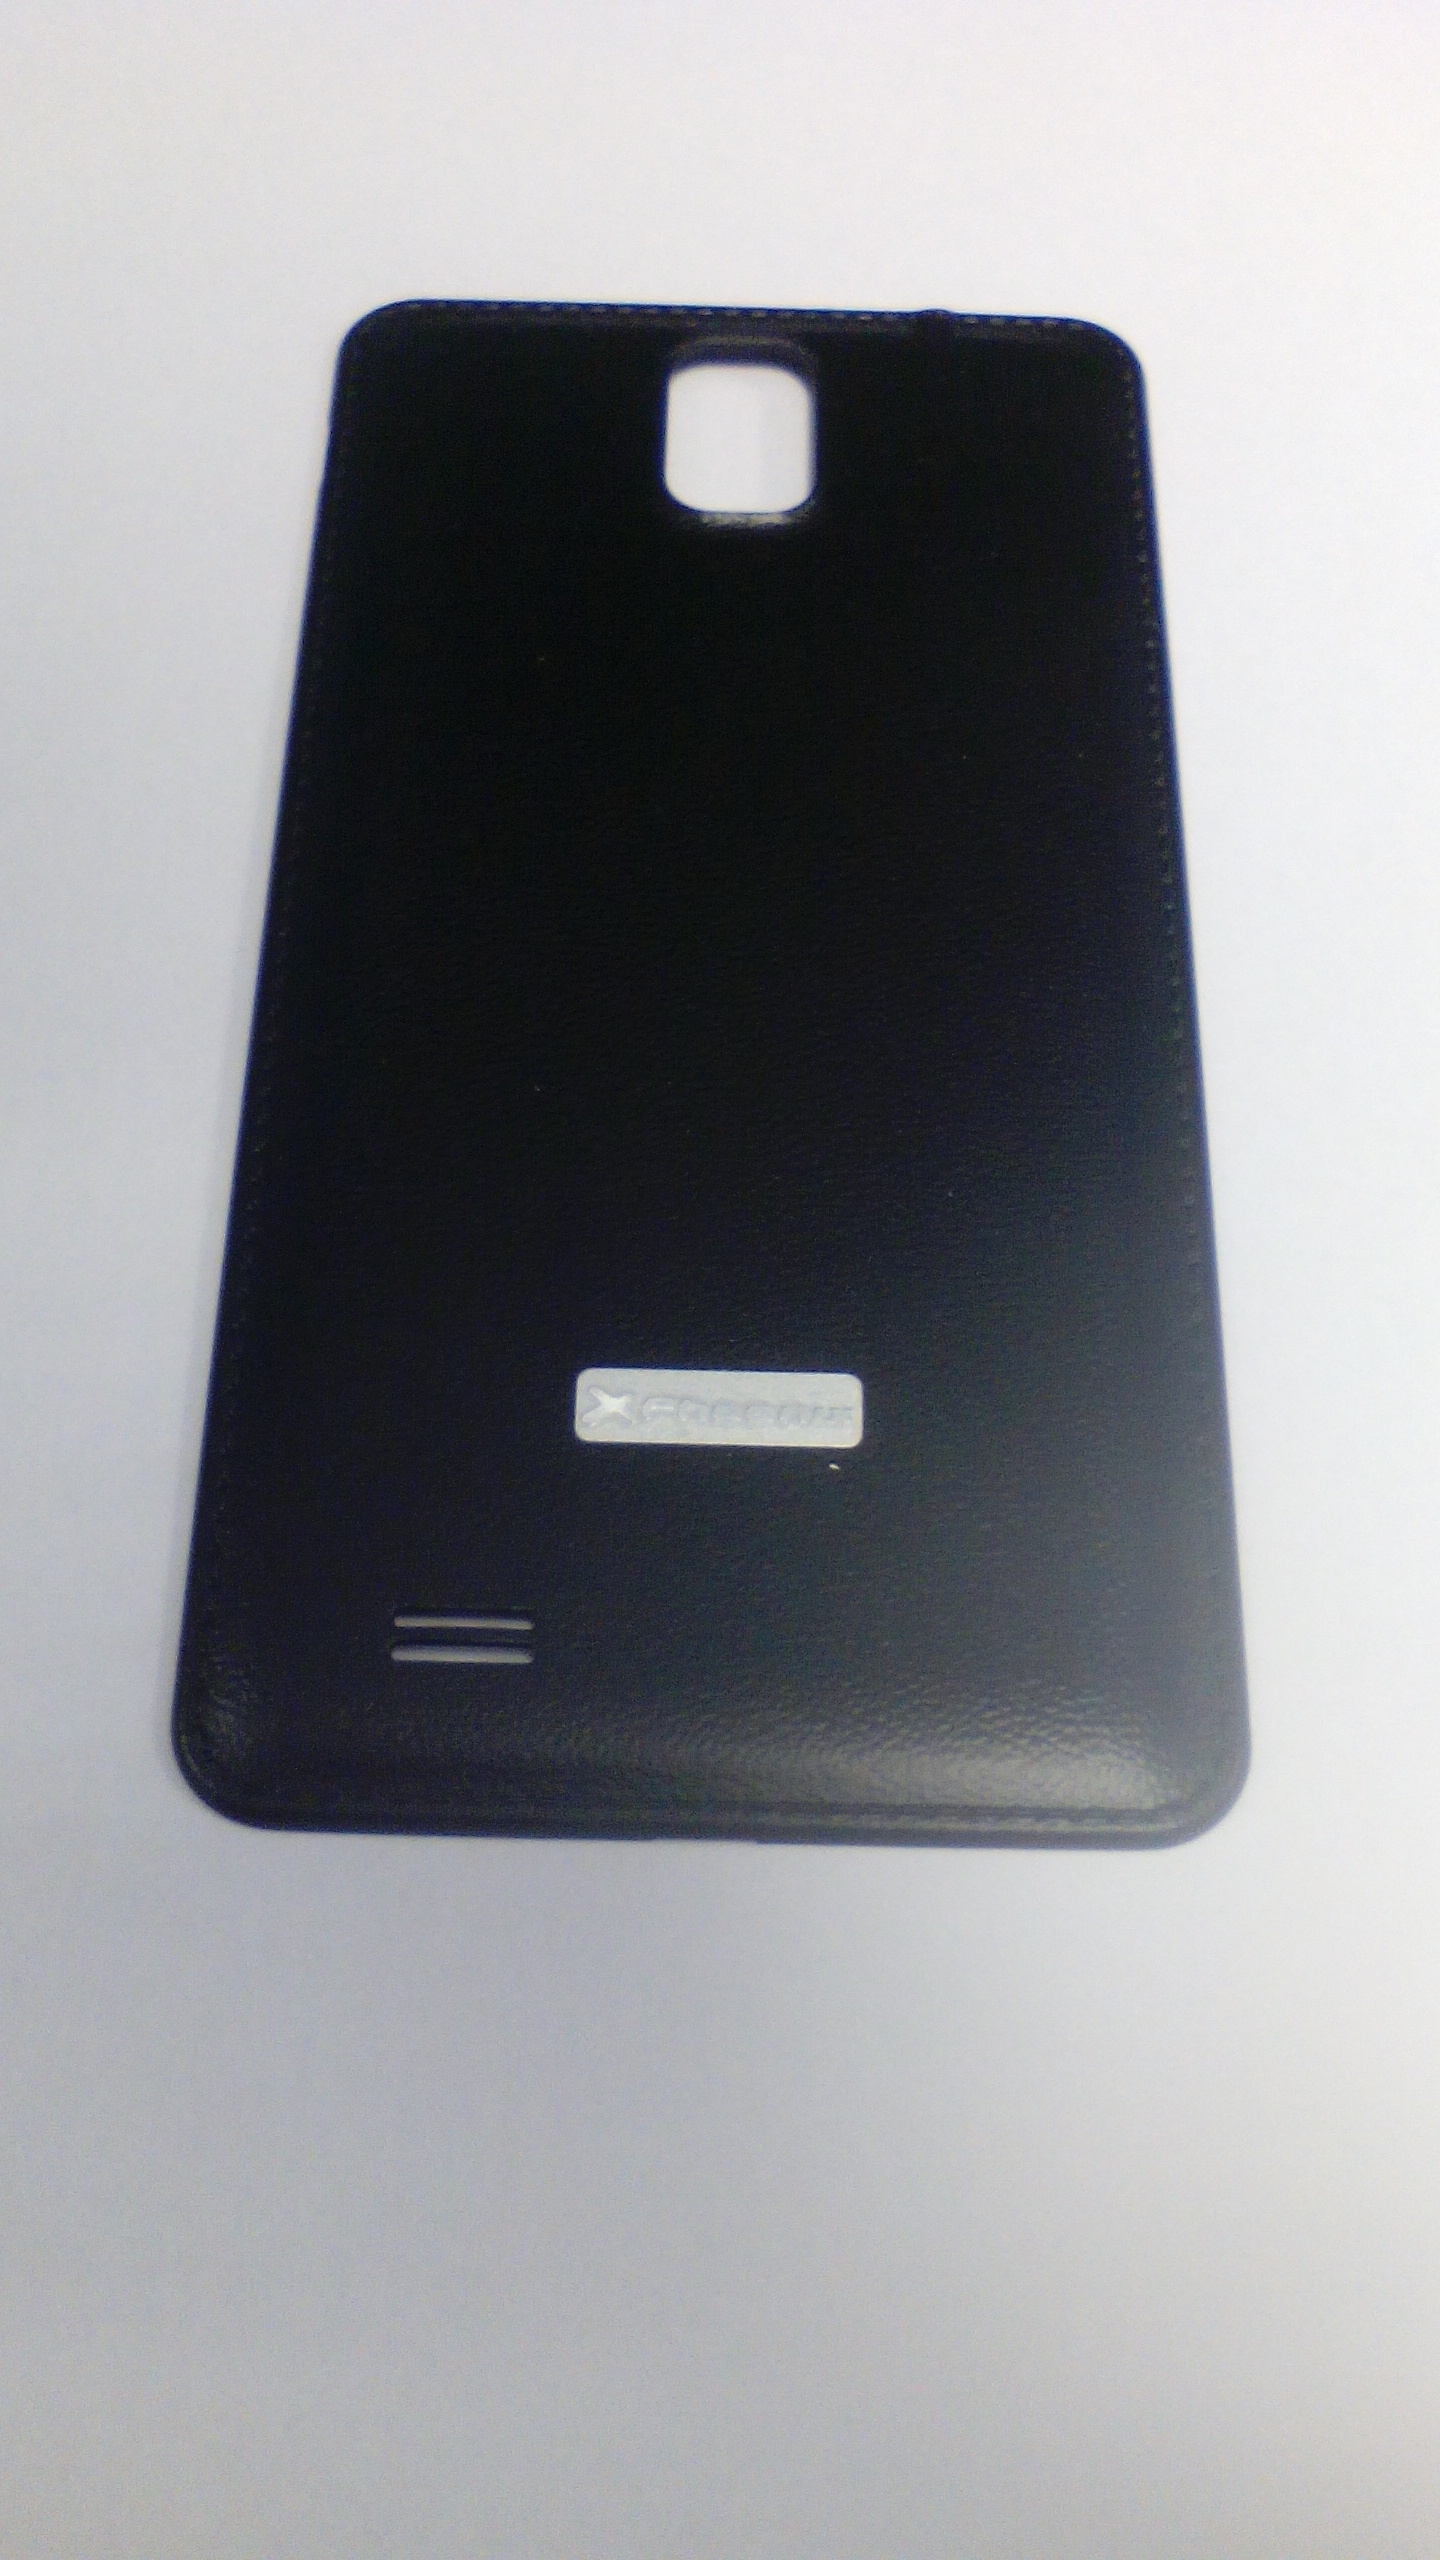 Repuesto carcasa cubrebateria negro smartphone phoenix phrockxlb